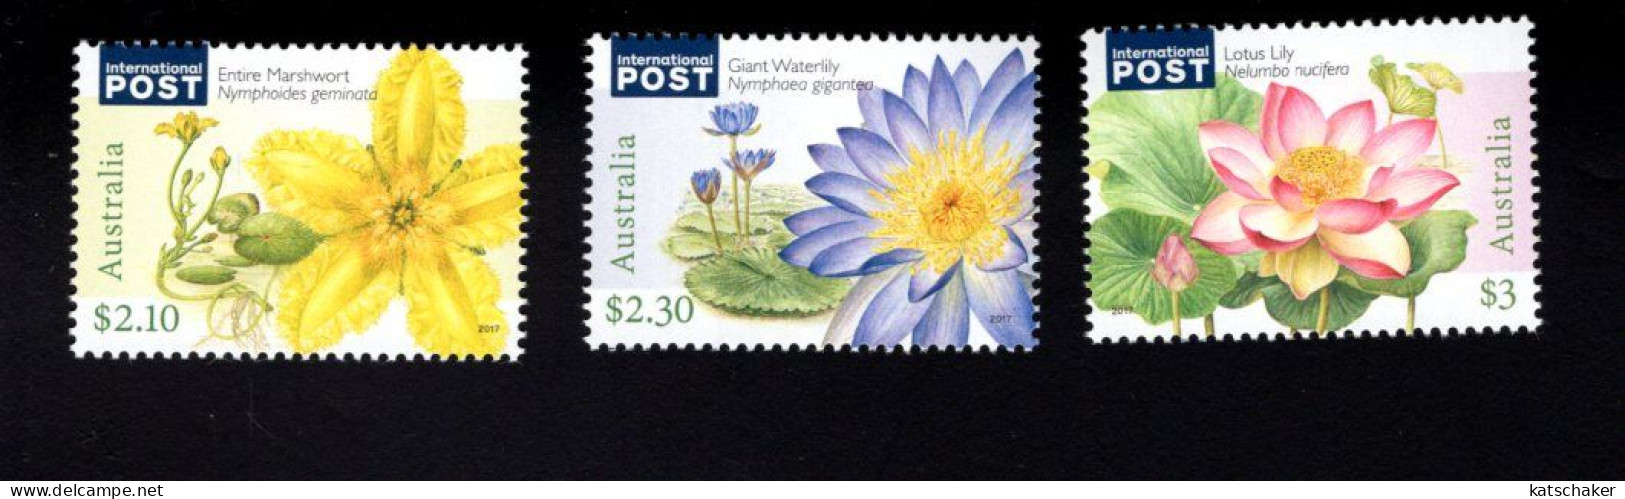 1794291364 2017 SCOTT 4680 4682 (XX) POSTFRIS MINT NEVER HINGED   -  WATER   PLANTS  - FLORA - Mint Stamps